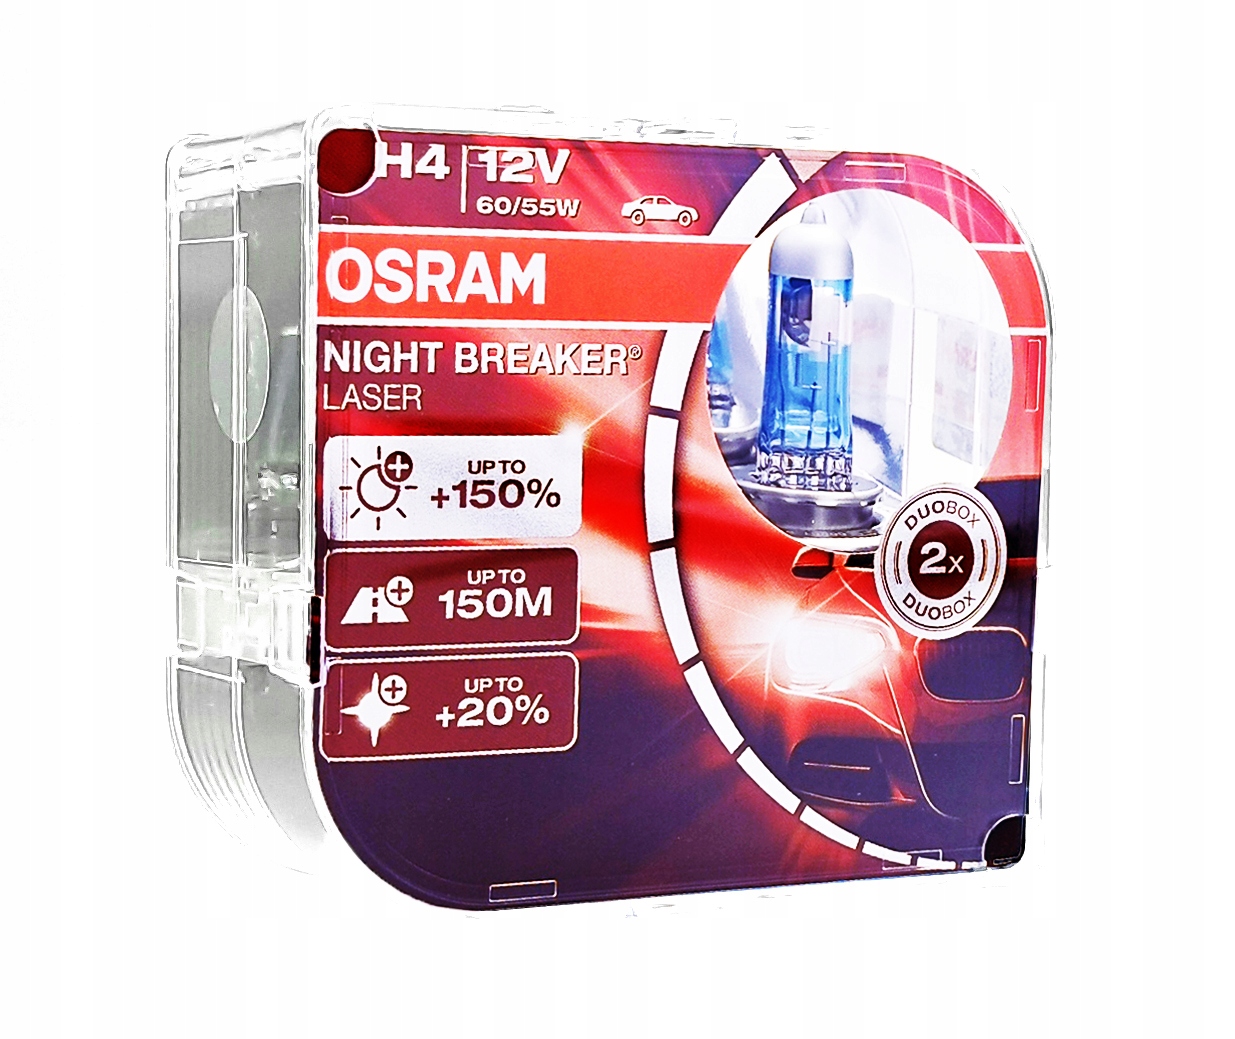 OSRAM H4 12V 60/55W +150 NIGHT BREAKER LASER 2 шт